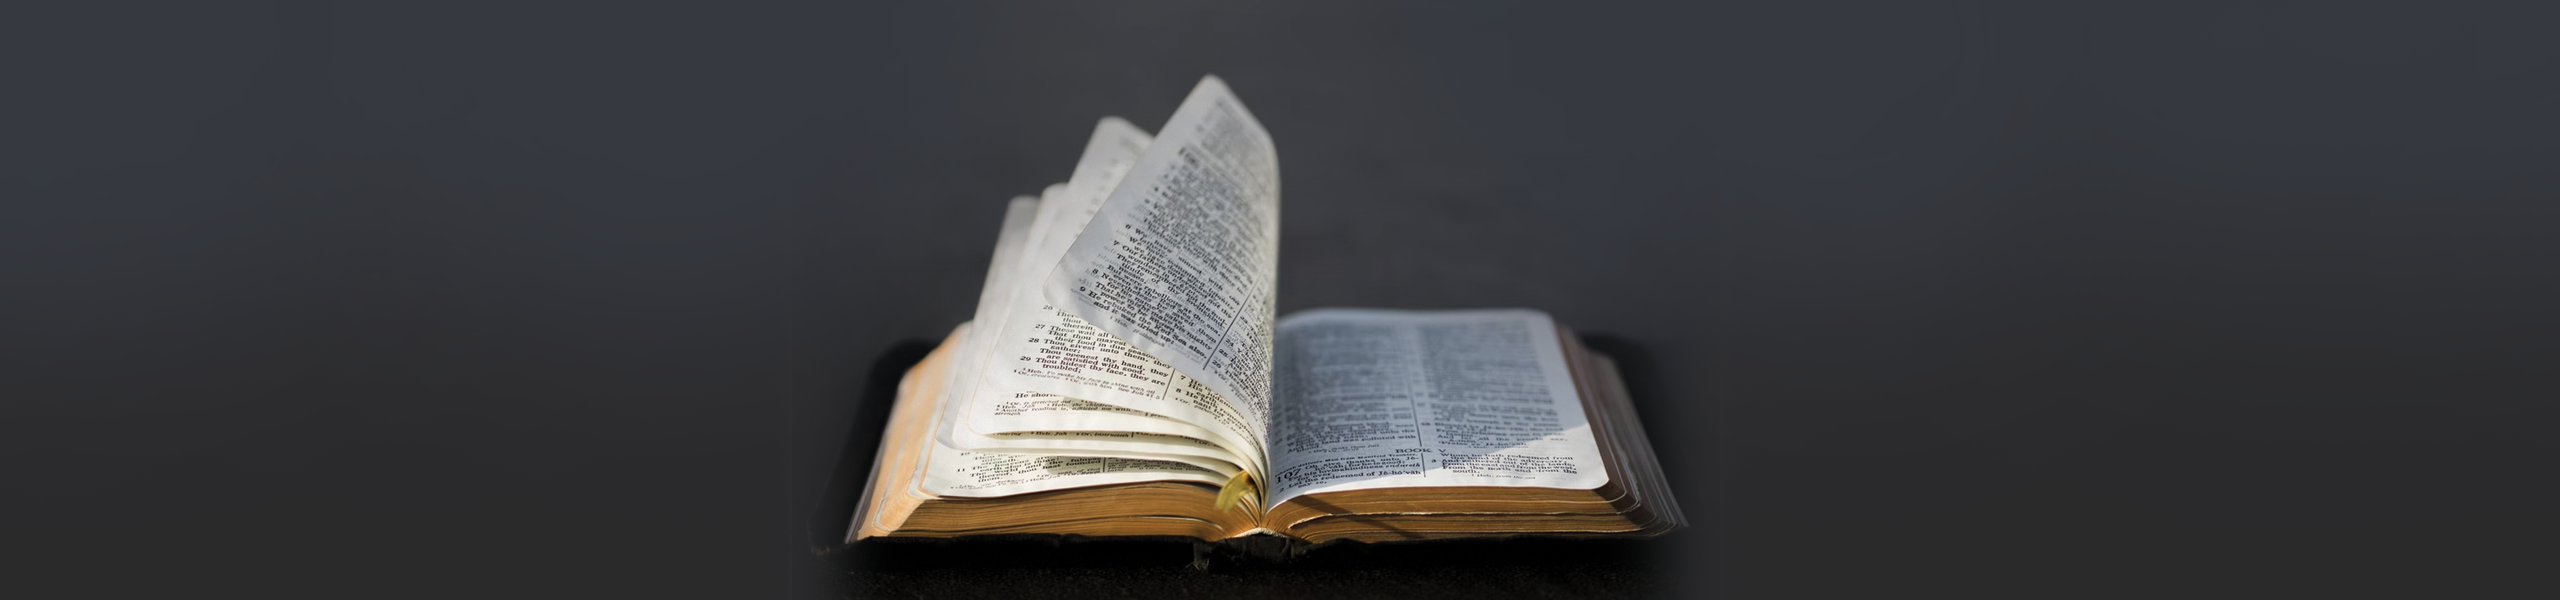 Look at the Book: Ephesians | John Piper